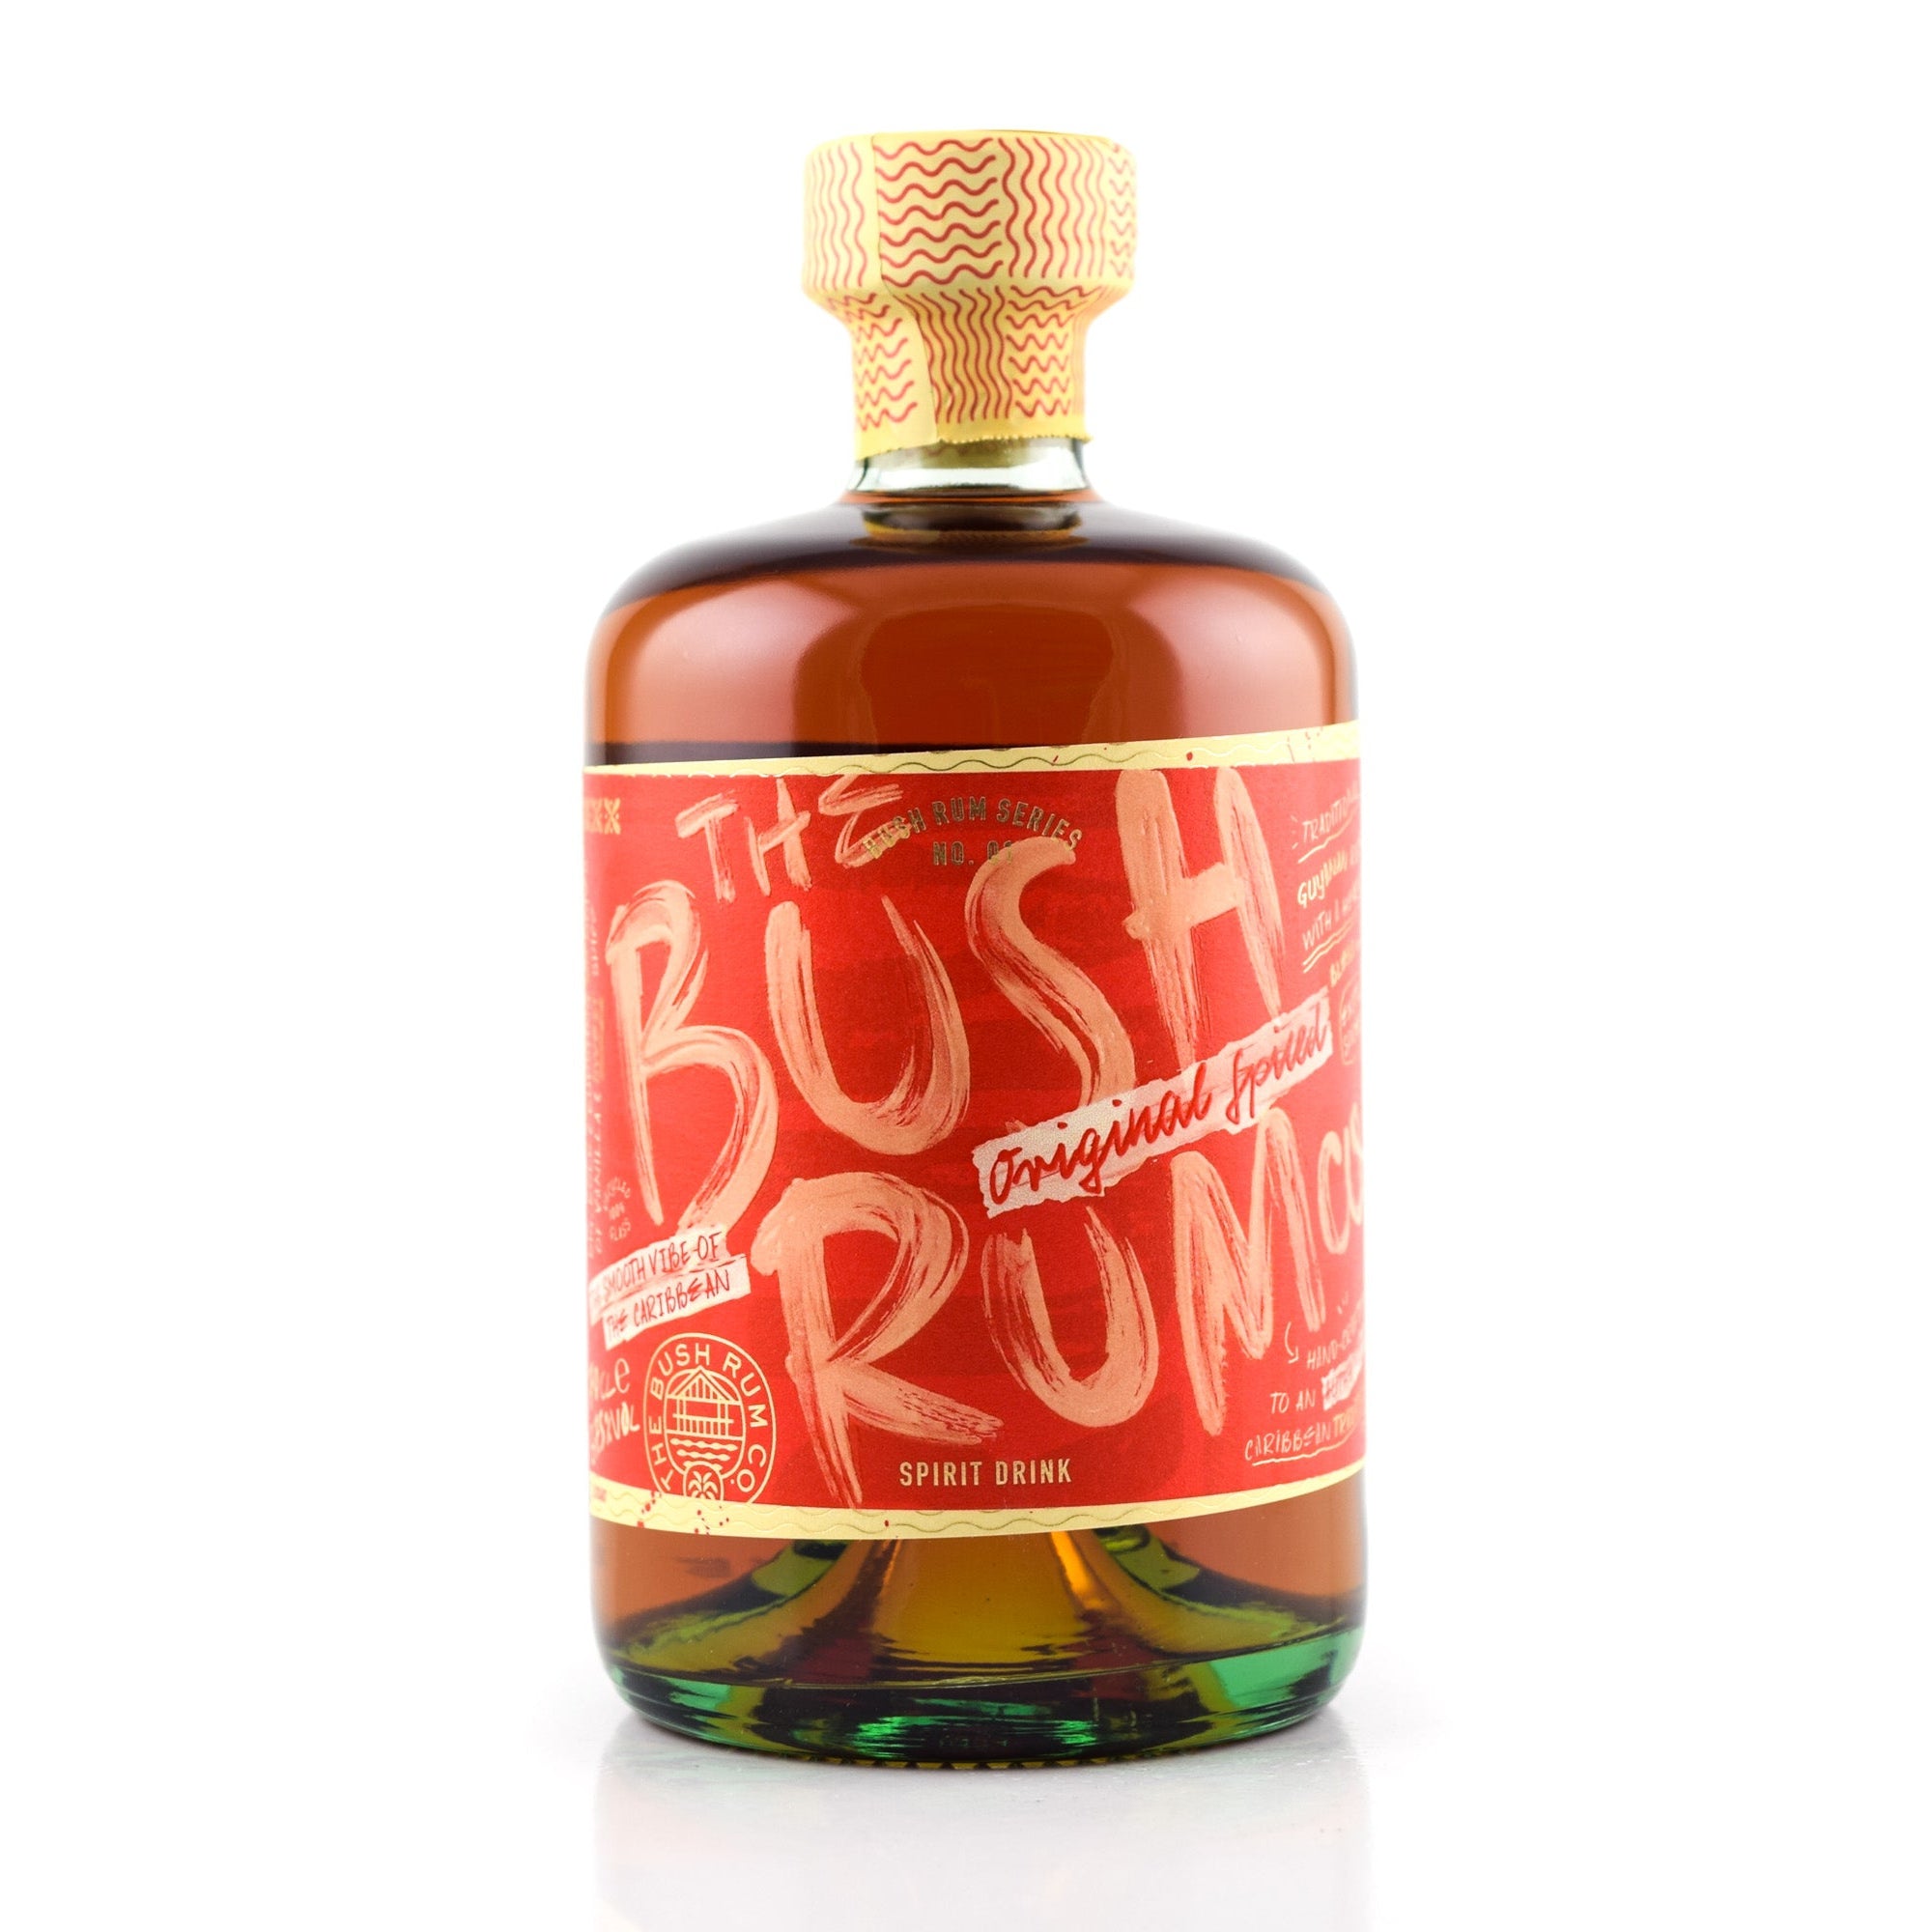 Bush Original Spiced Rum 37,5% 0,7l Vol